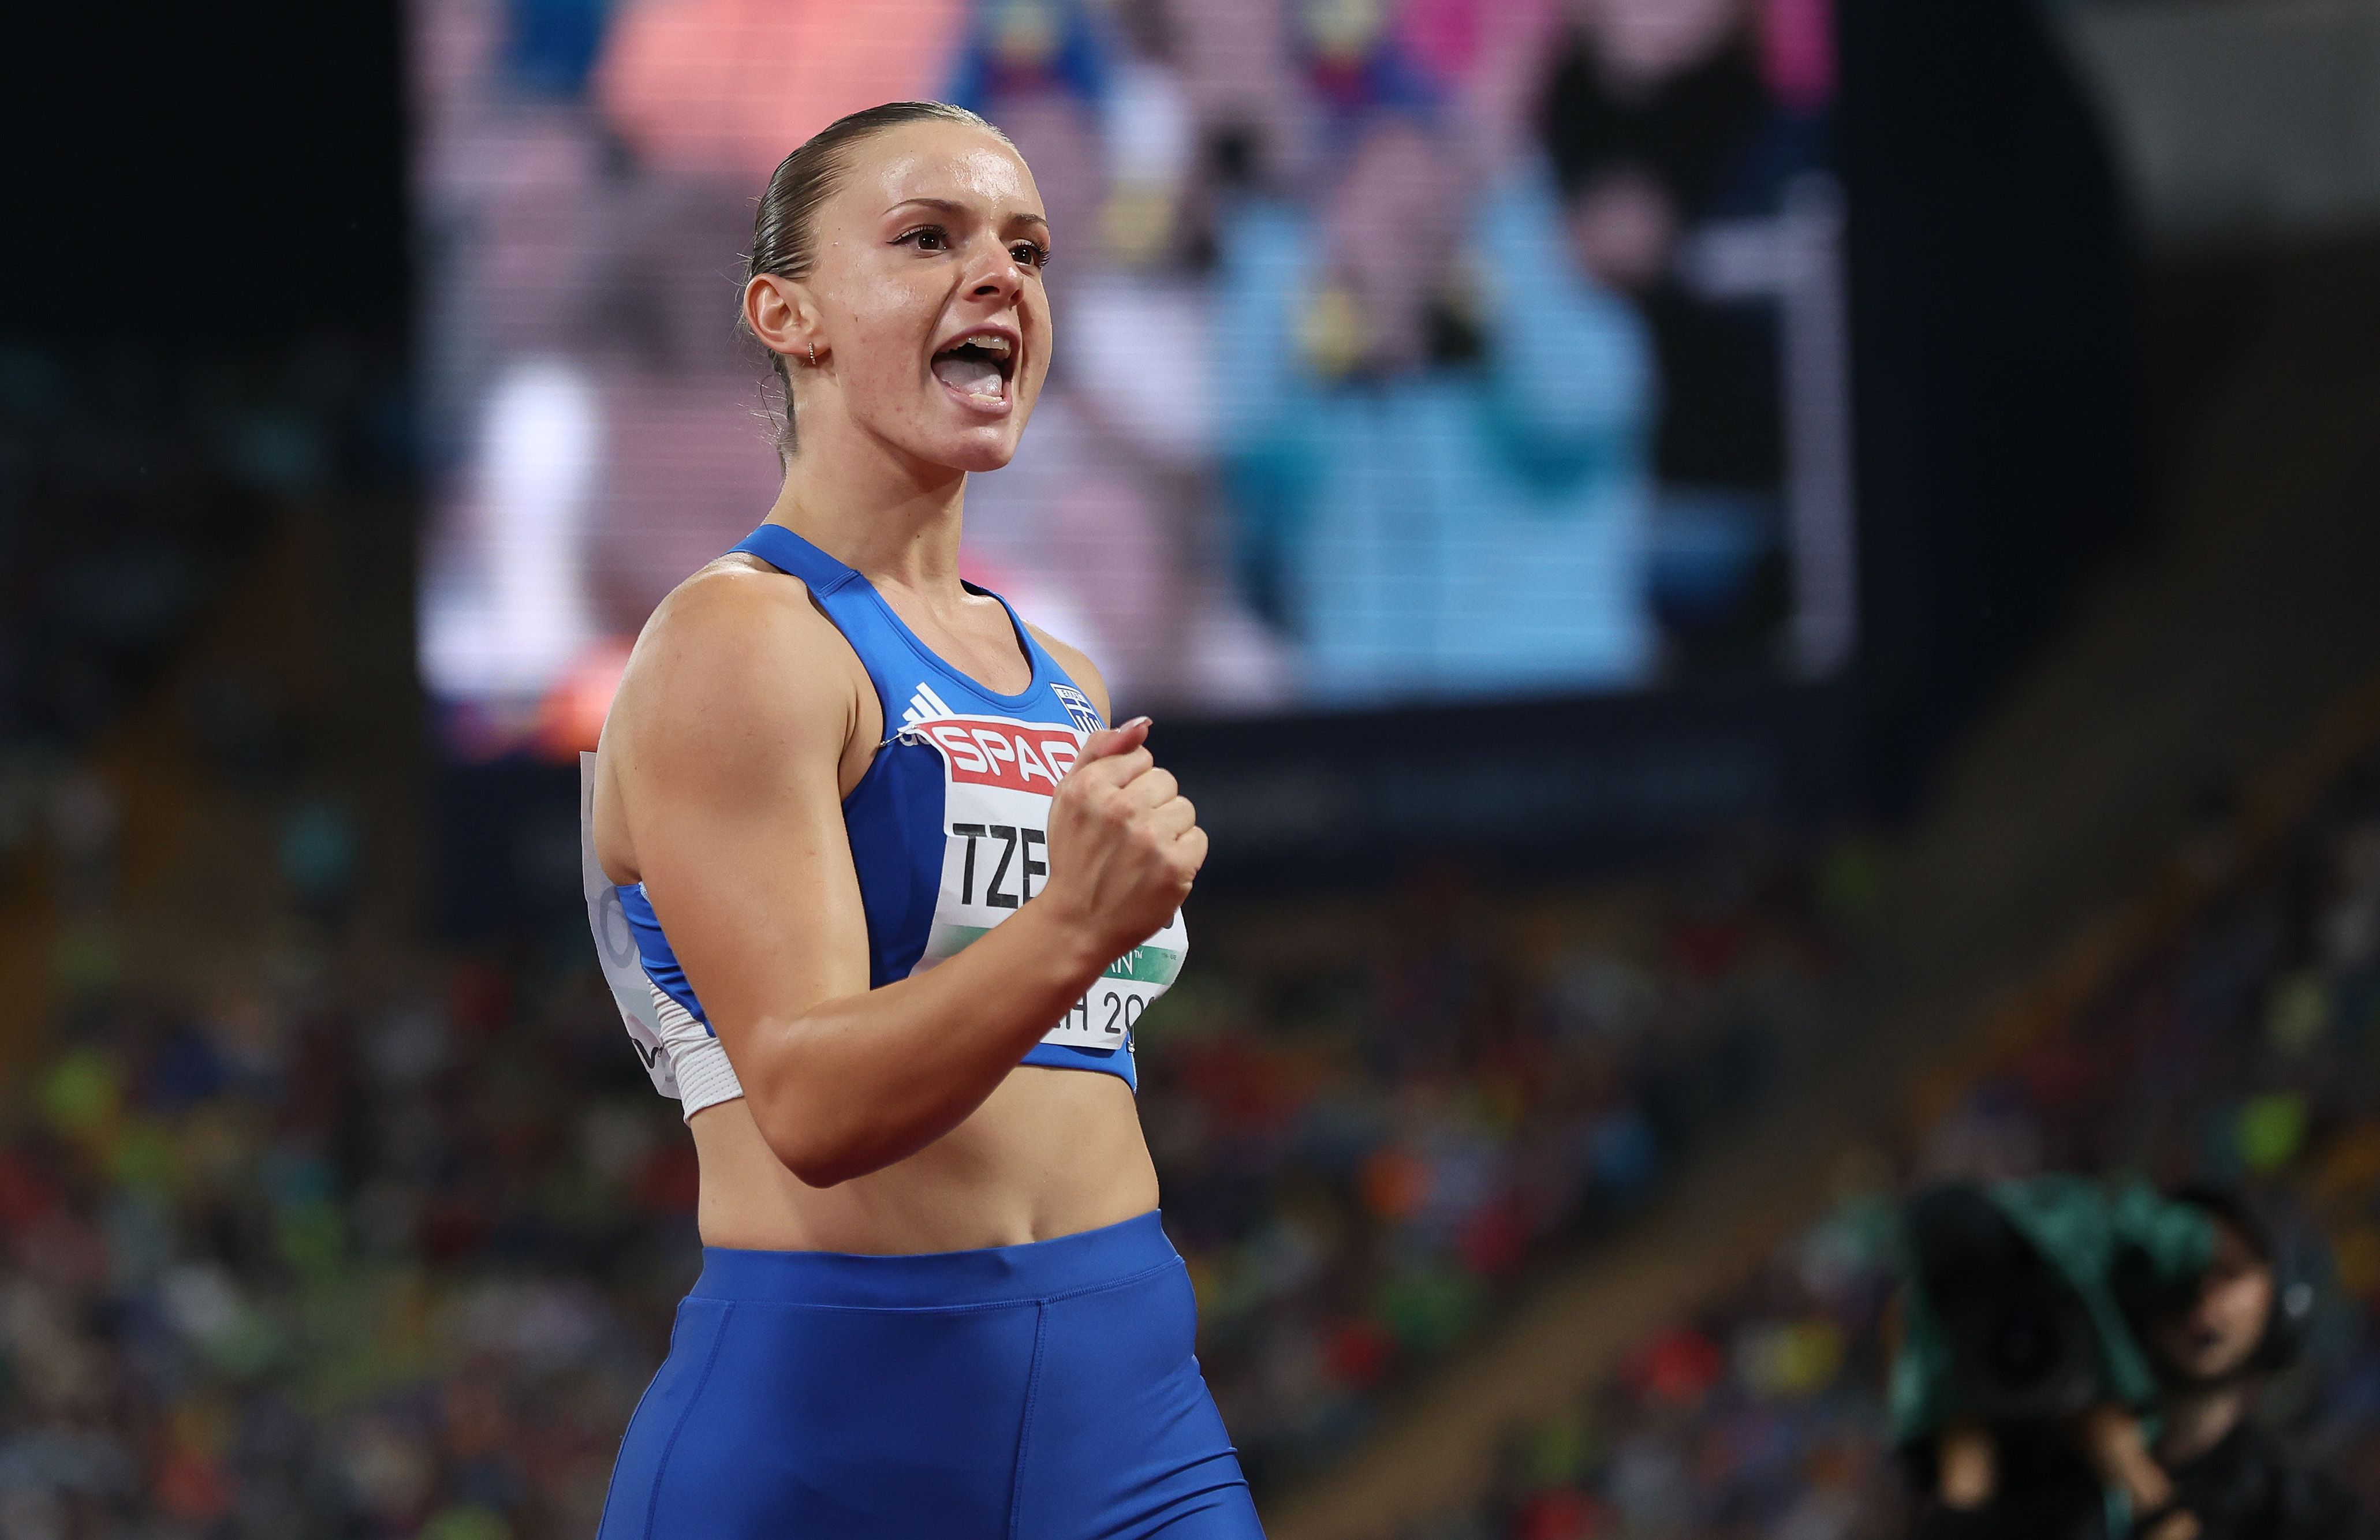 Elina Tzengko wins gold at the European Championships